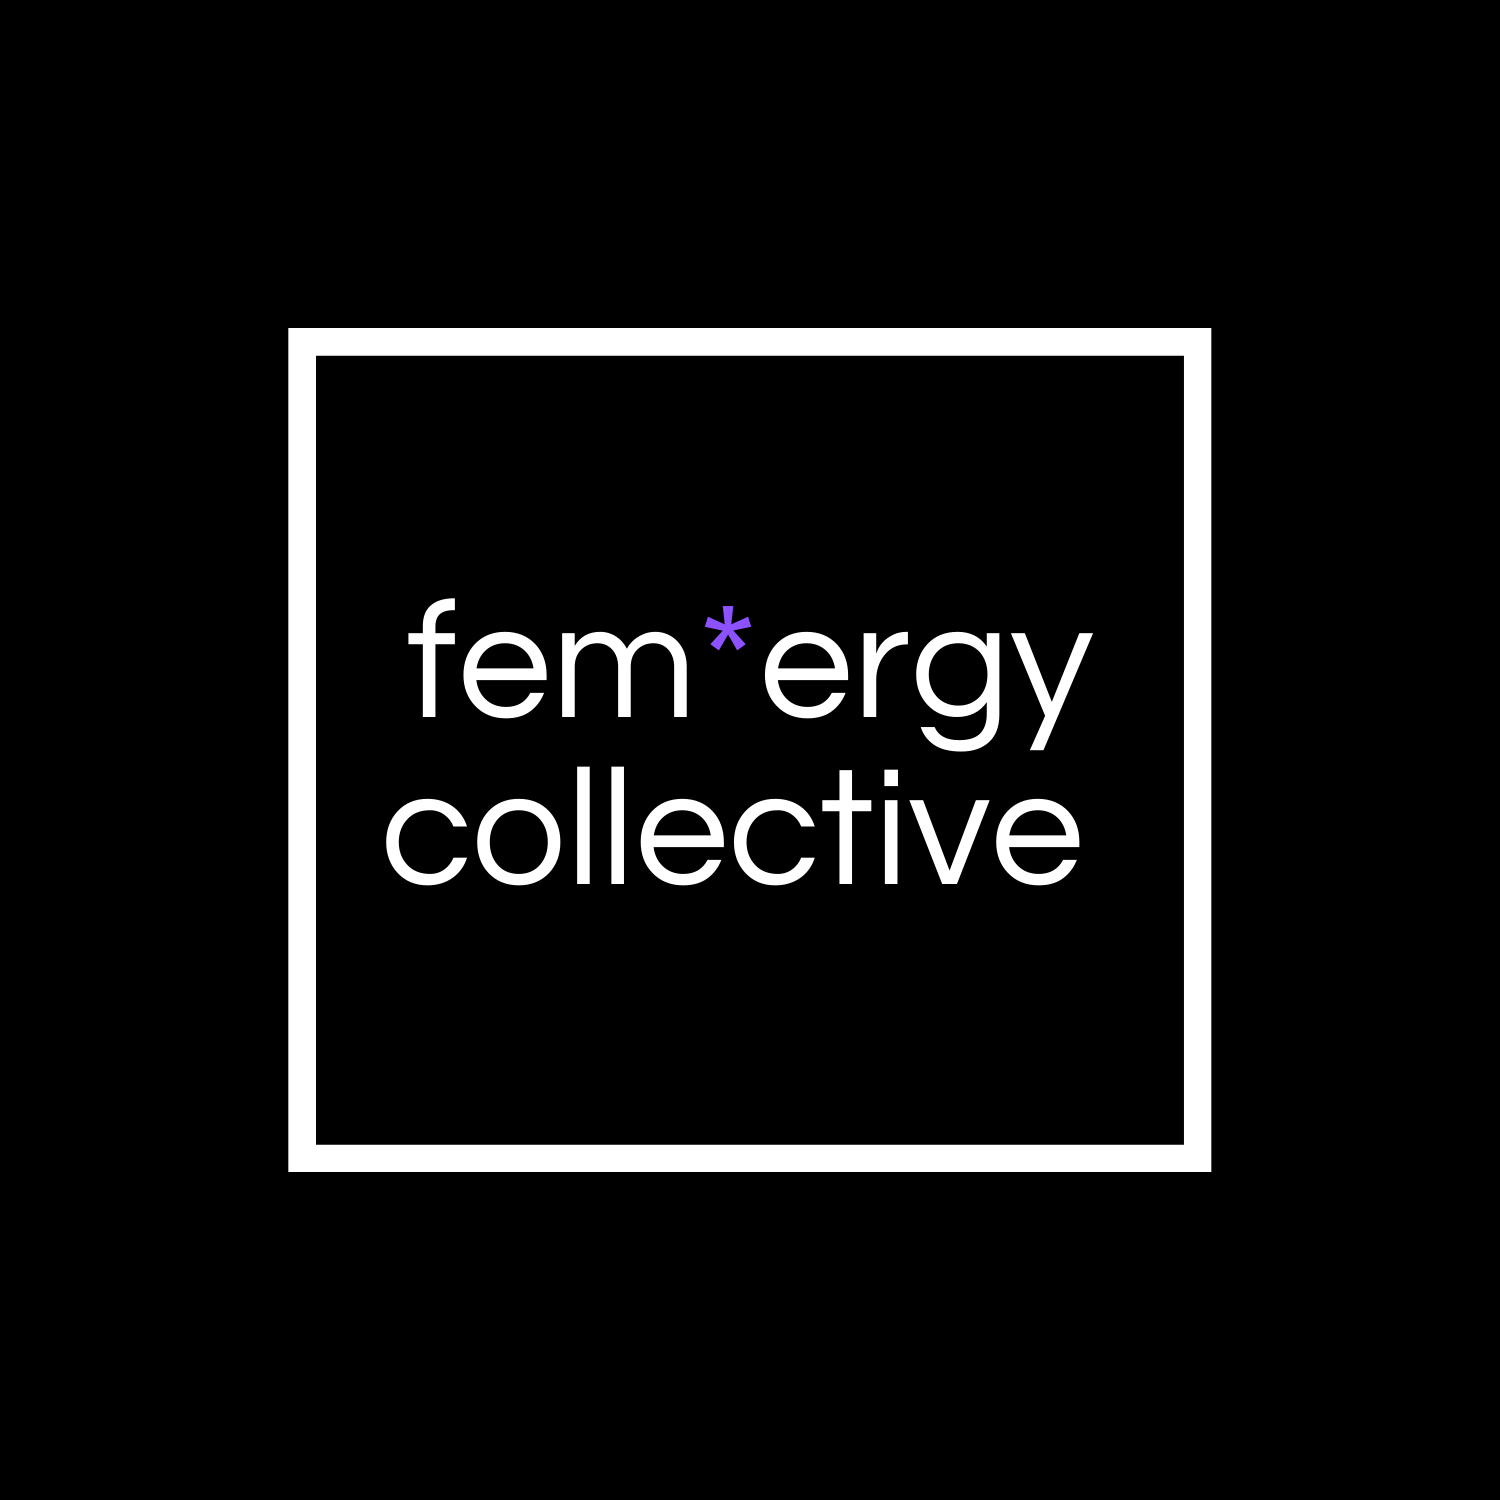 fem*ergy collective